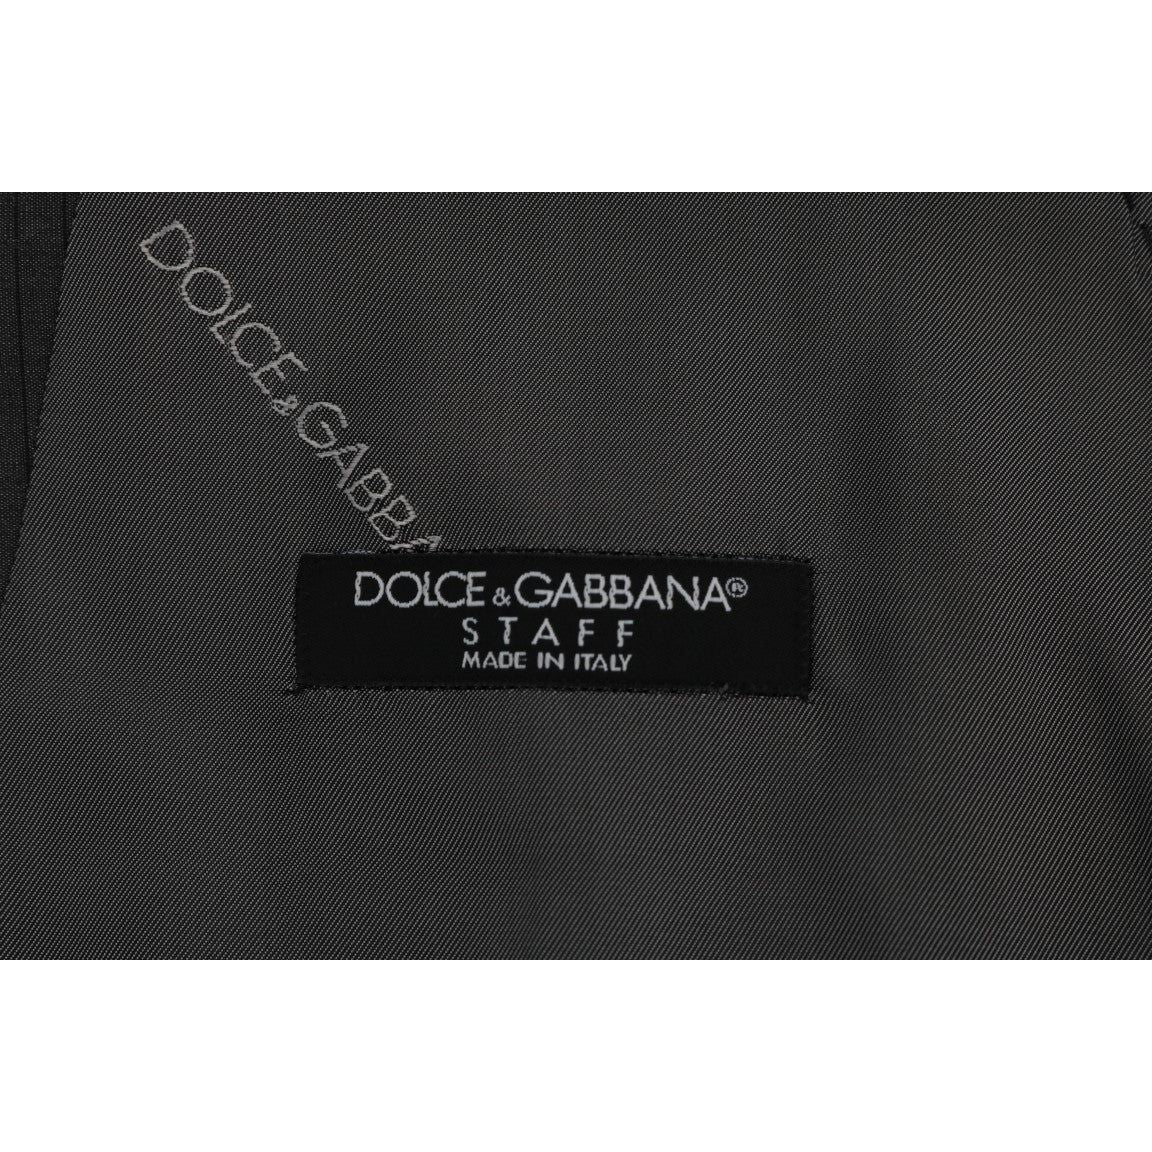 Dolce & Gabbana Sleek Gray Single-Breasted Waistcoat Vest gray-staff-cotton-rayon-vest-2 498757-gray-staff-cotton-rayon-vest-3-5.jpg